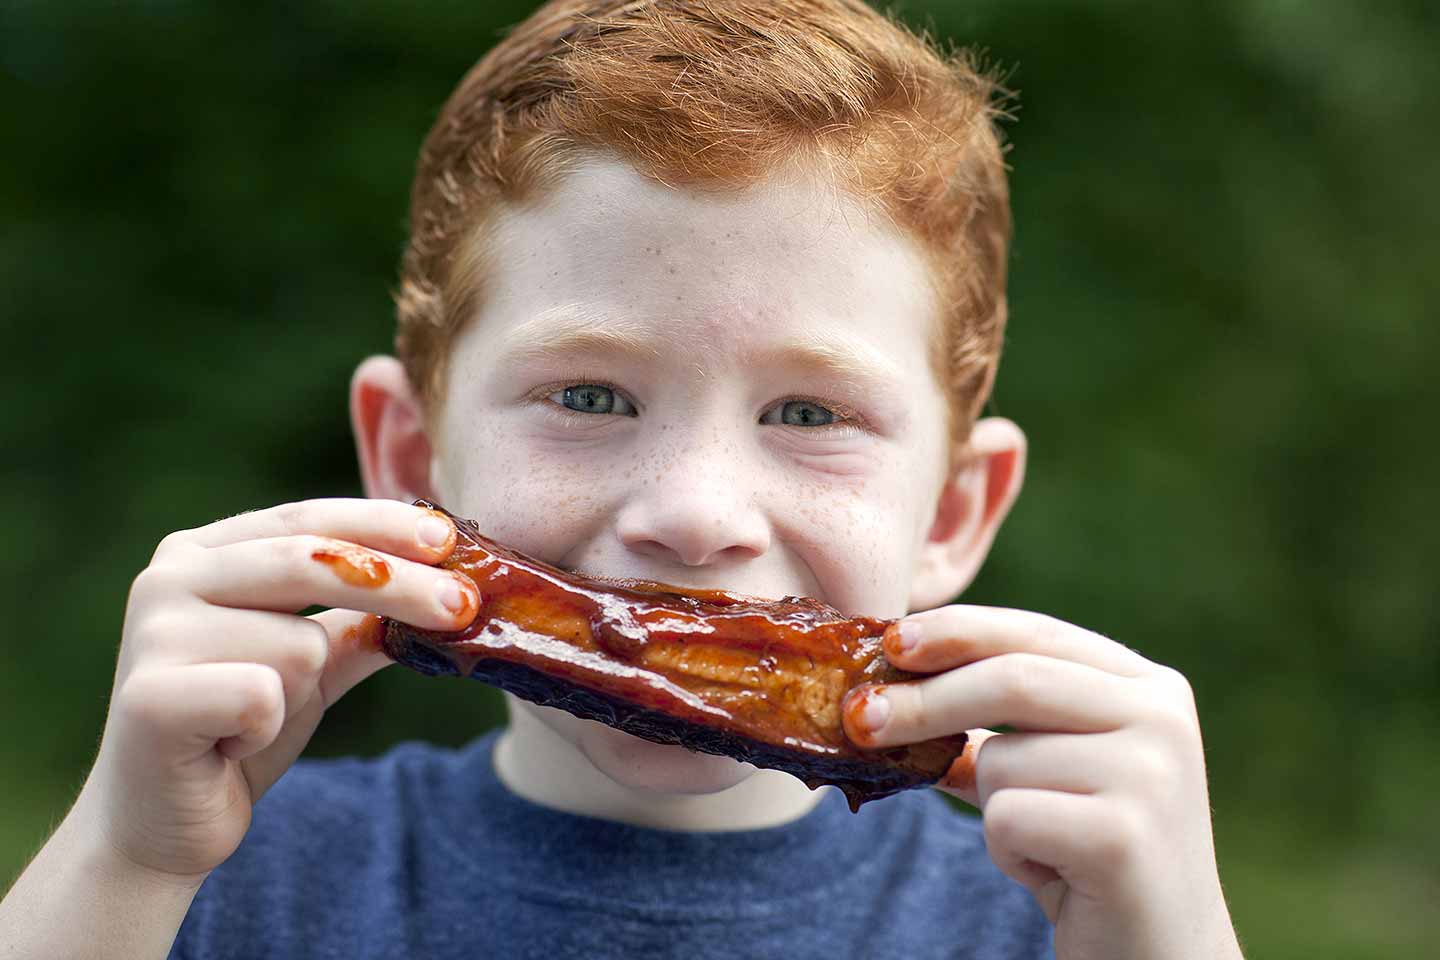 Young boy enjoying barbeque food